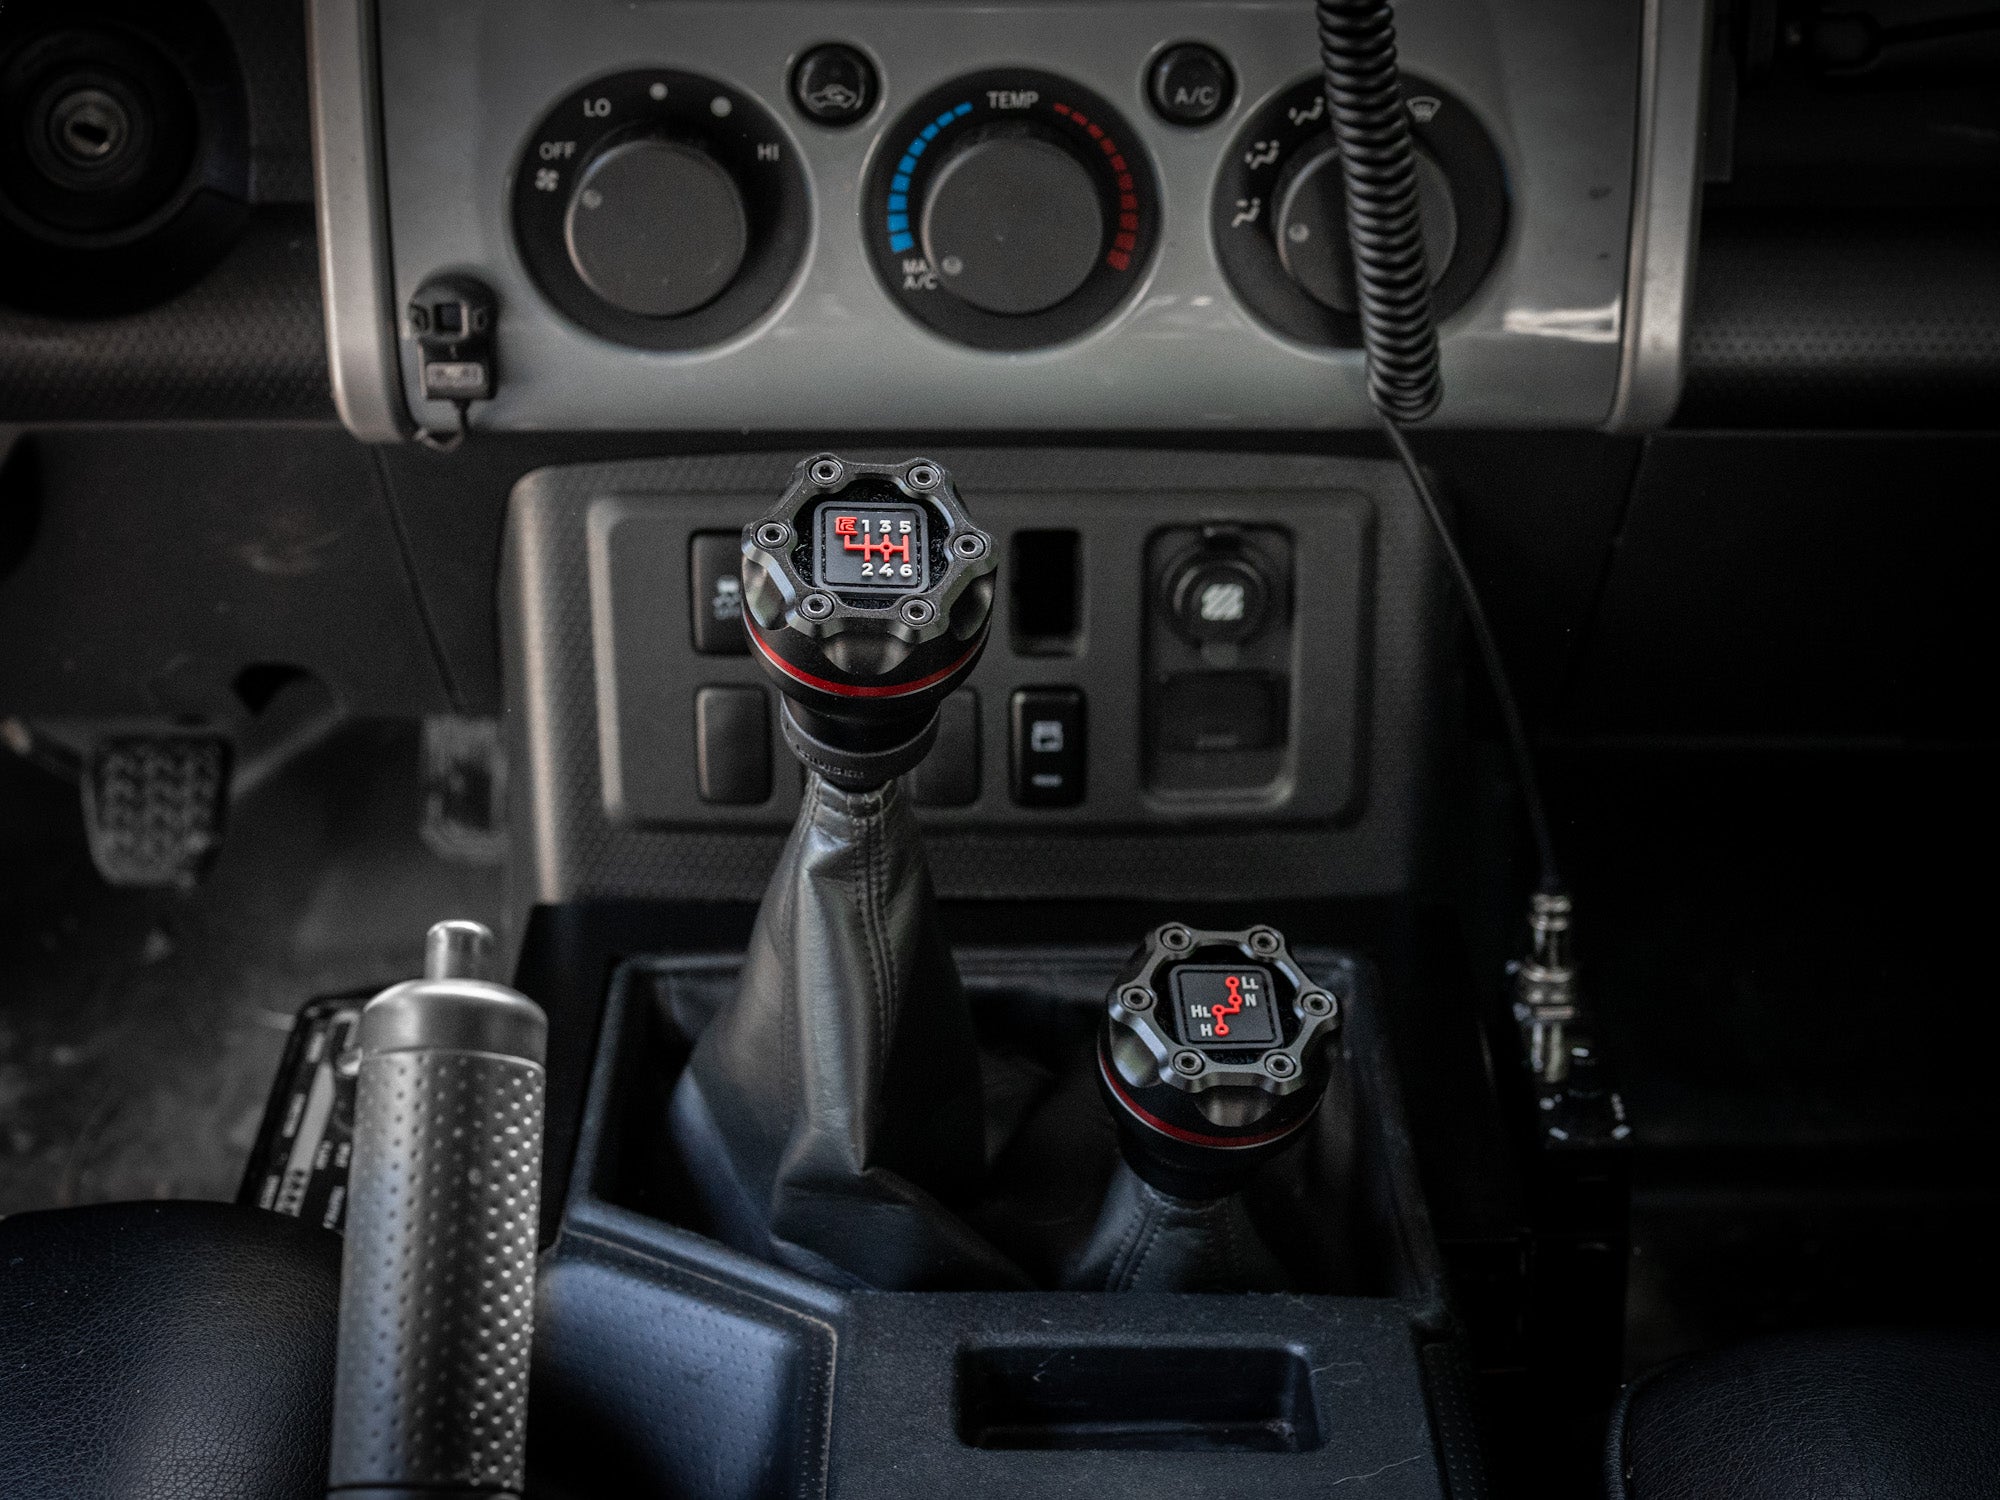 Gear Shift Knob - Truck Gear Knob Latest Price, Manufacturers